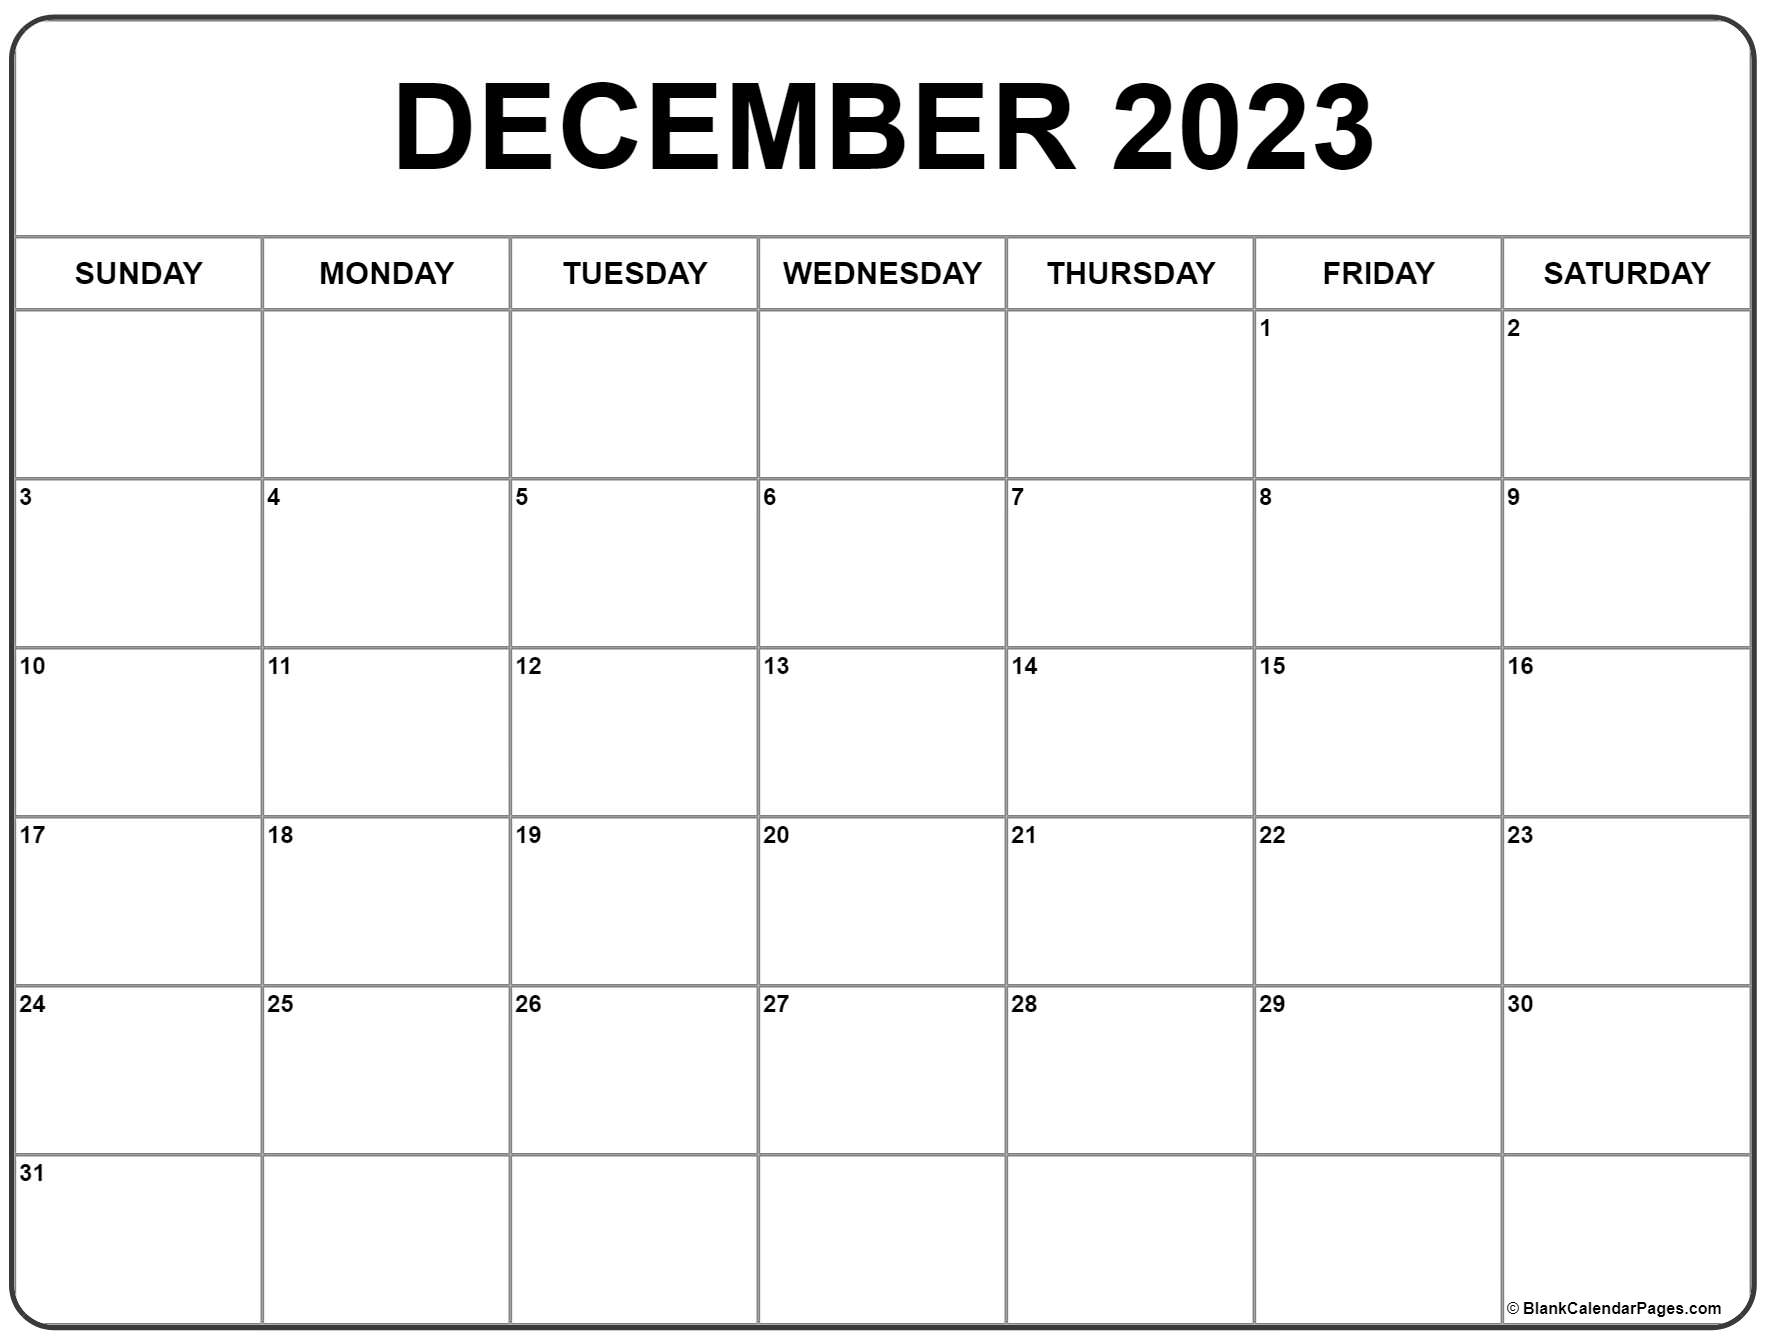 december-2023-calendar-with-holidays-usa-time-and-date-calendar-2023